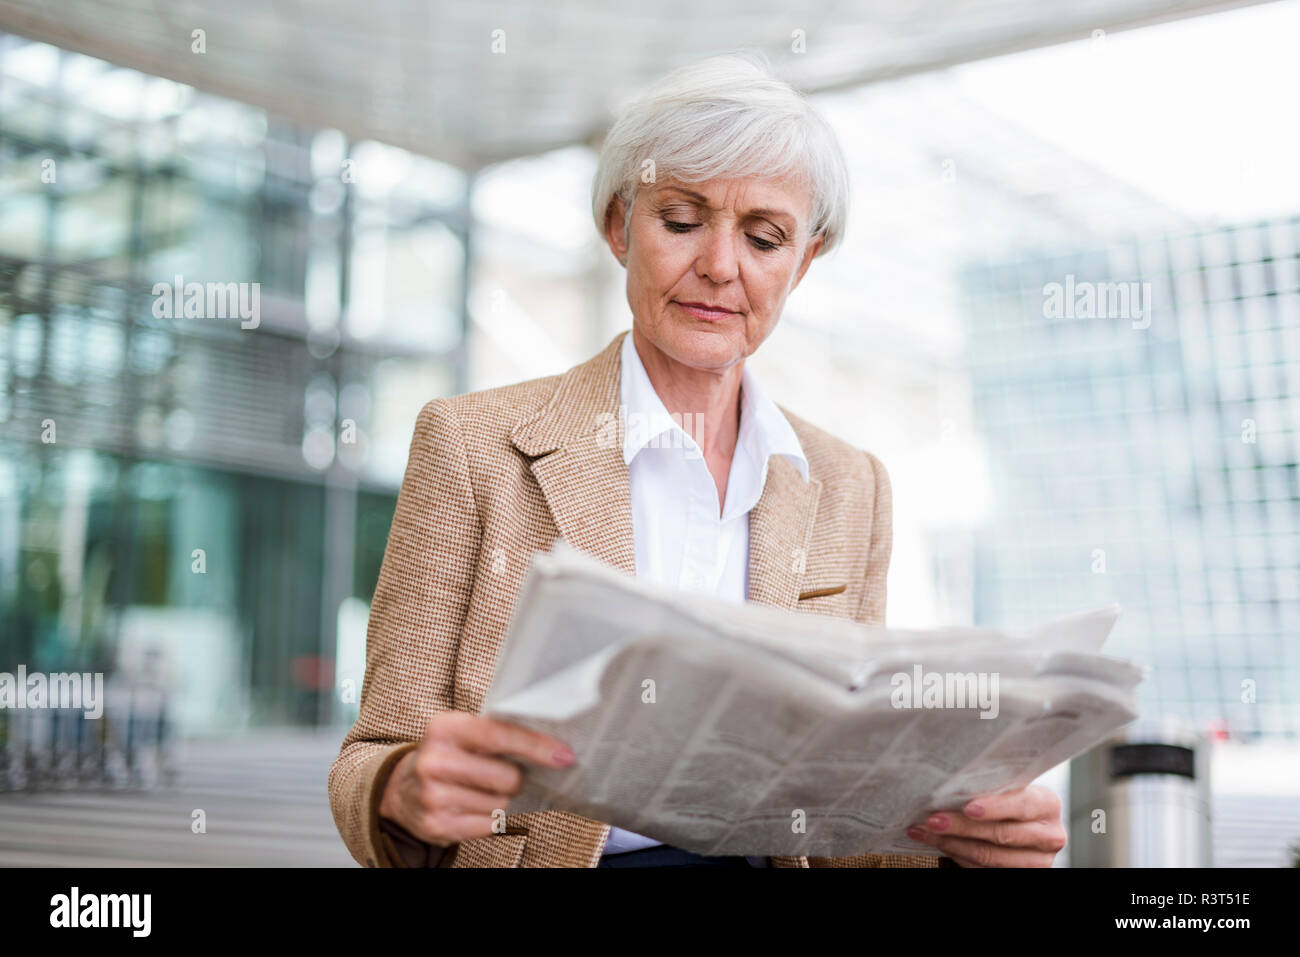 Senior businesswoman in the city reading newspaper Stock Photo